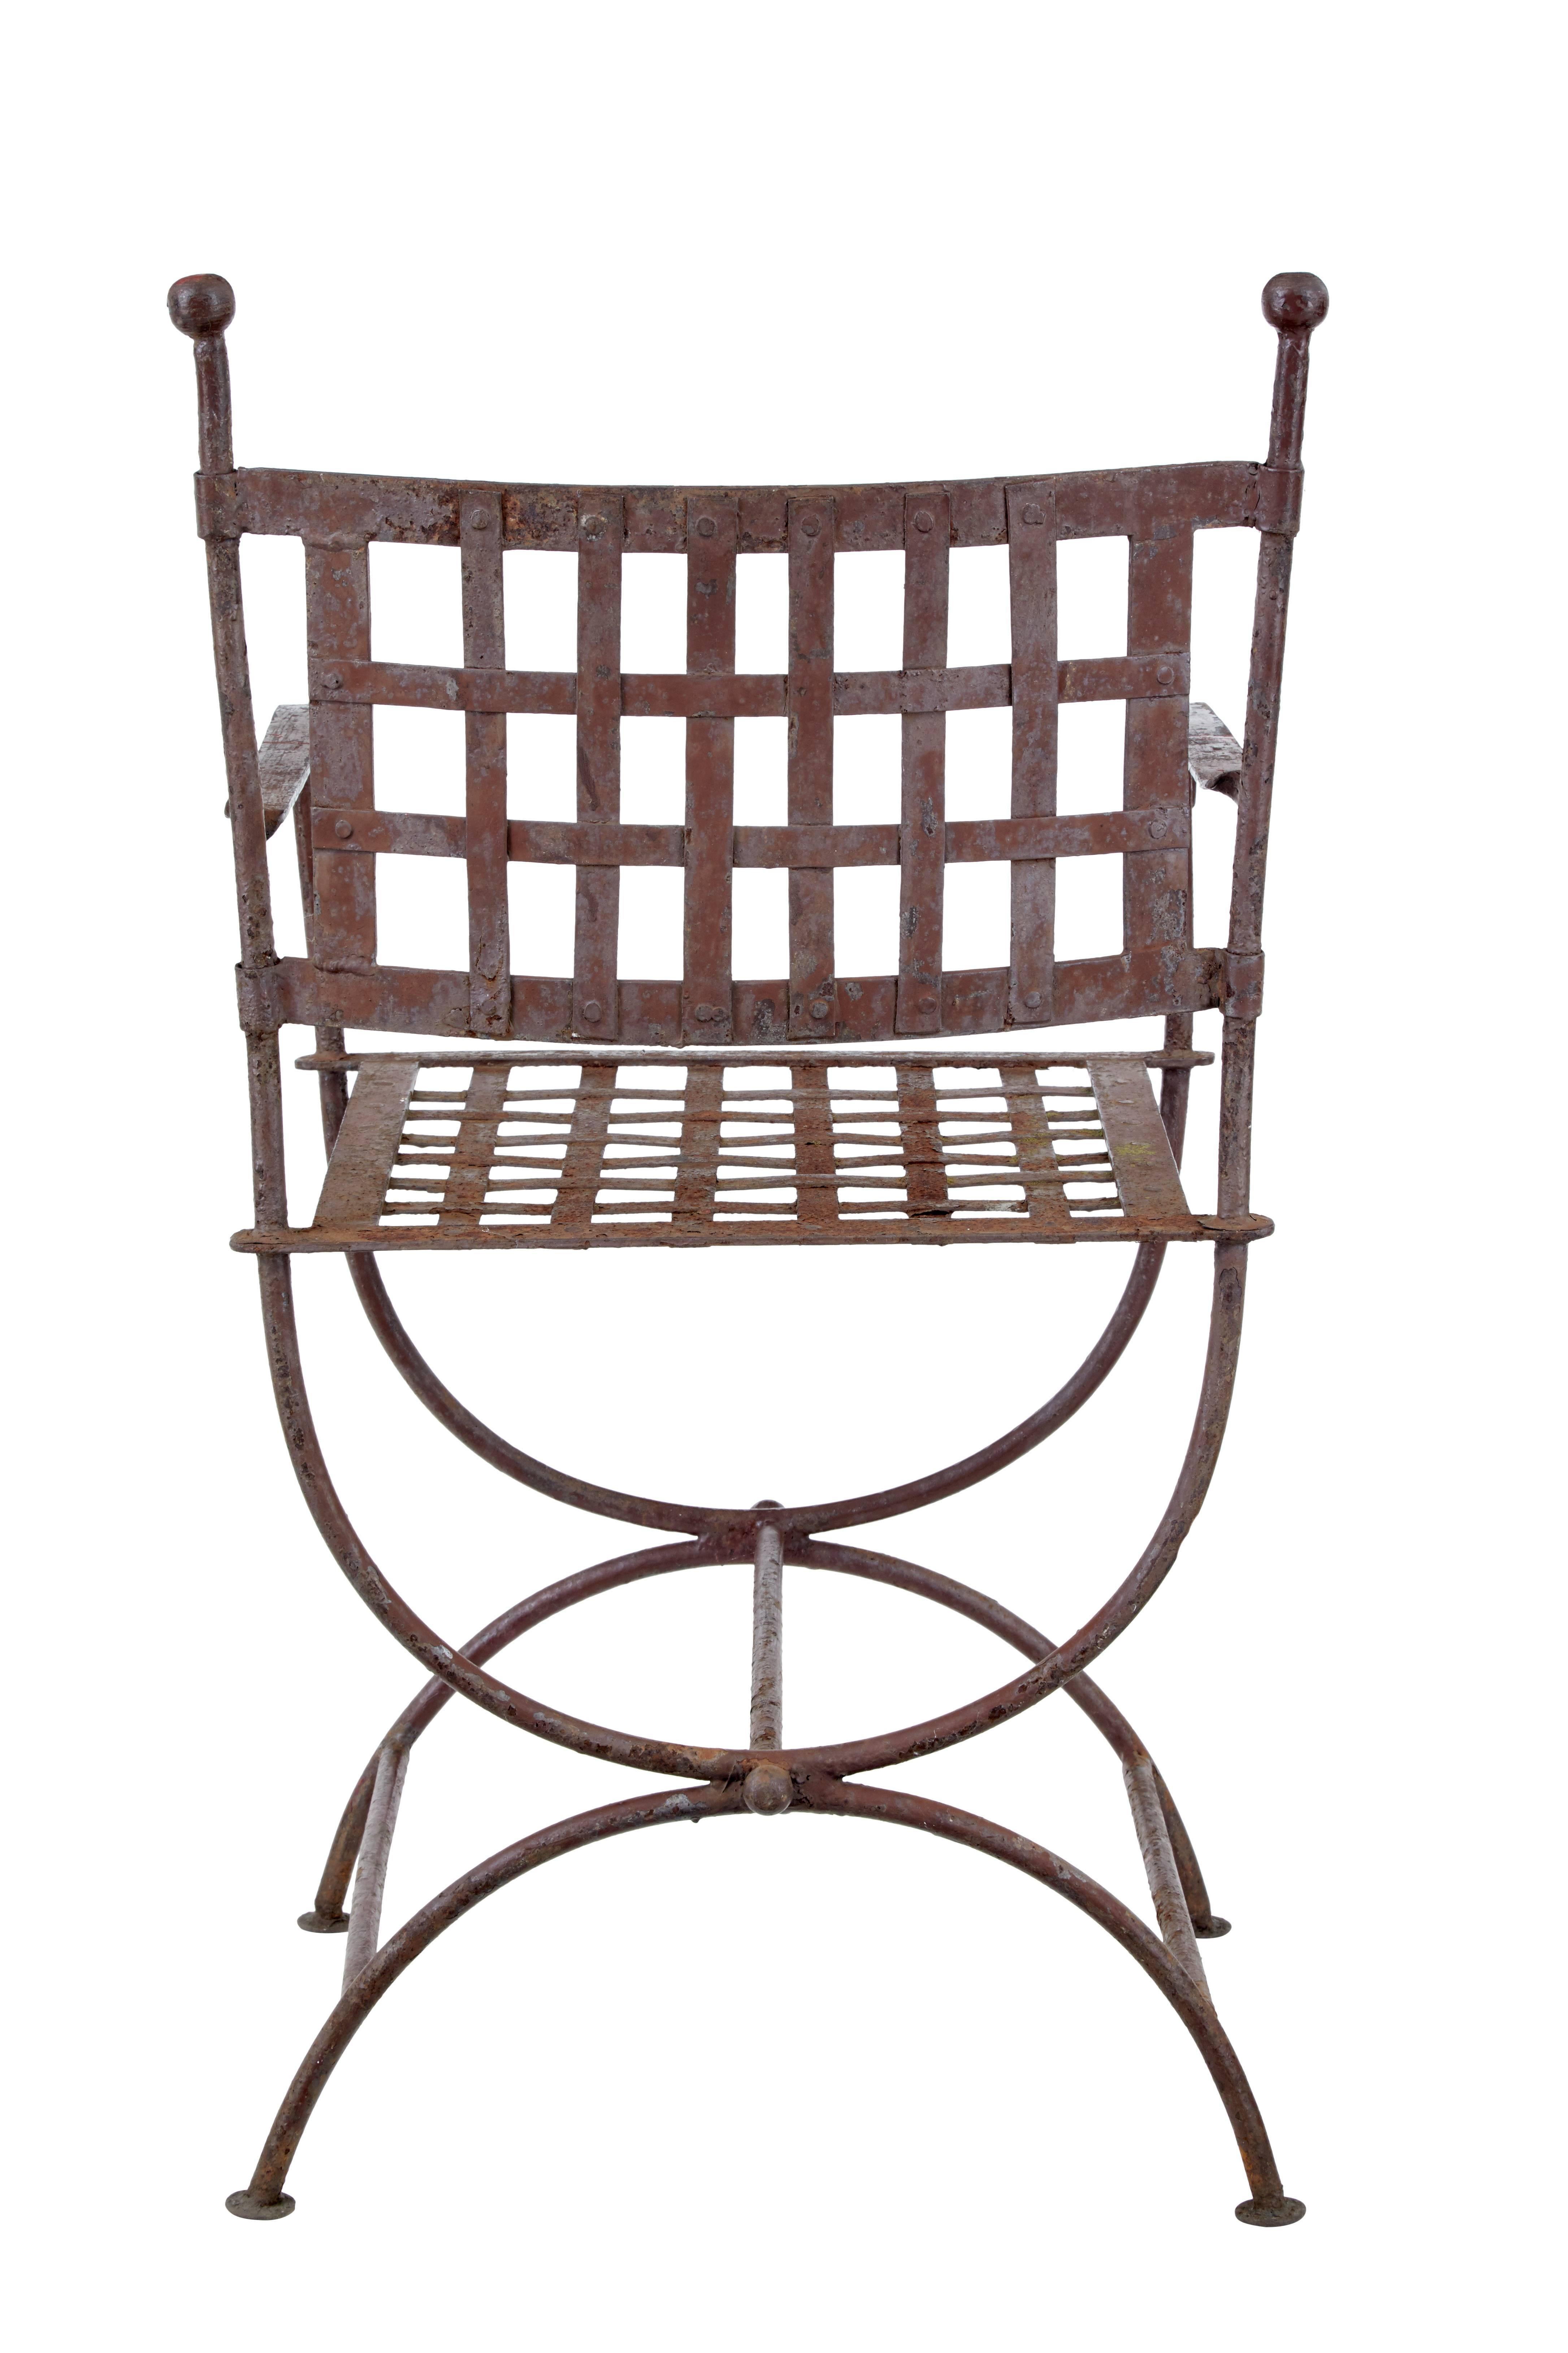 Swedish Set of Four Wrought Iron Decorative Garden Chairs